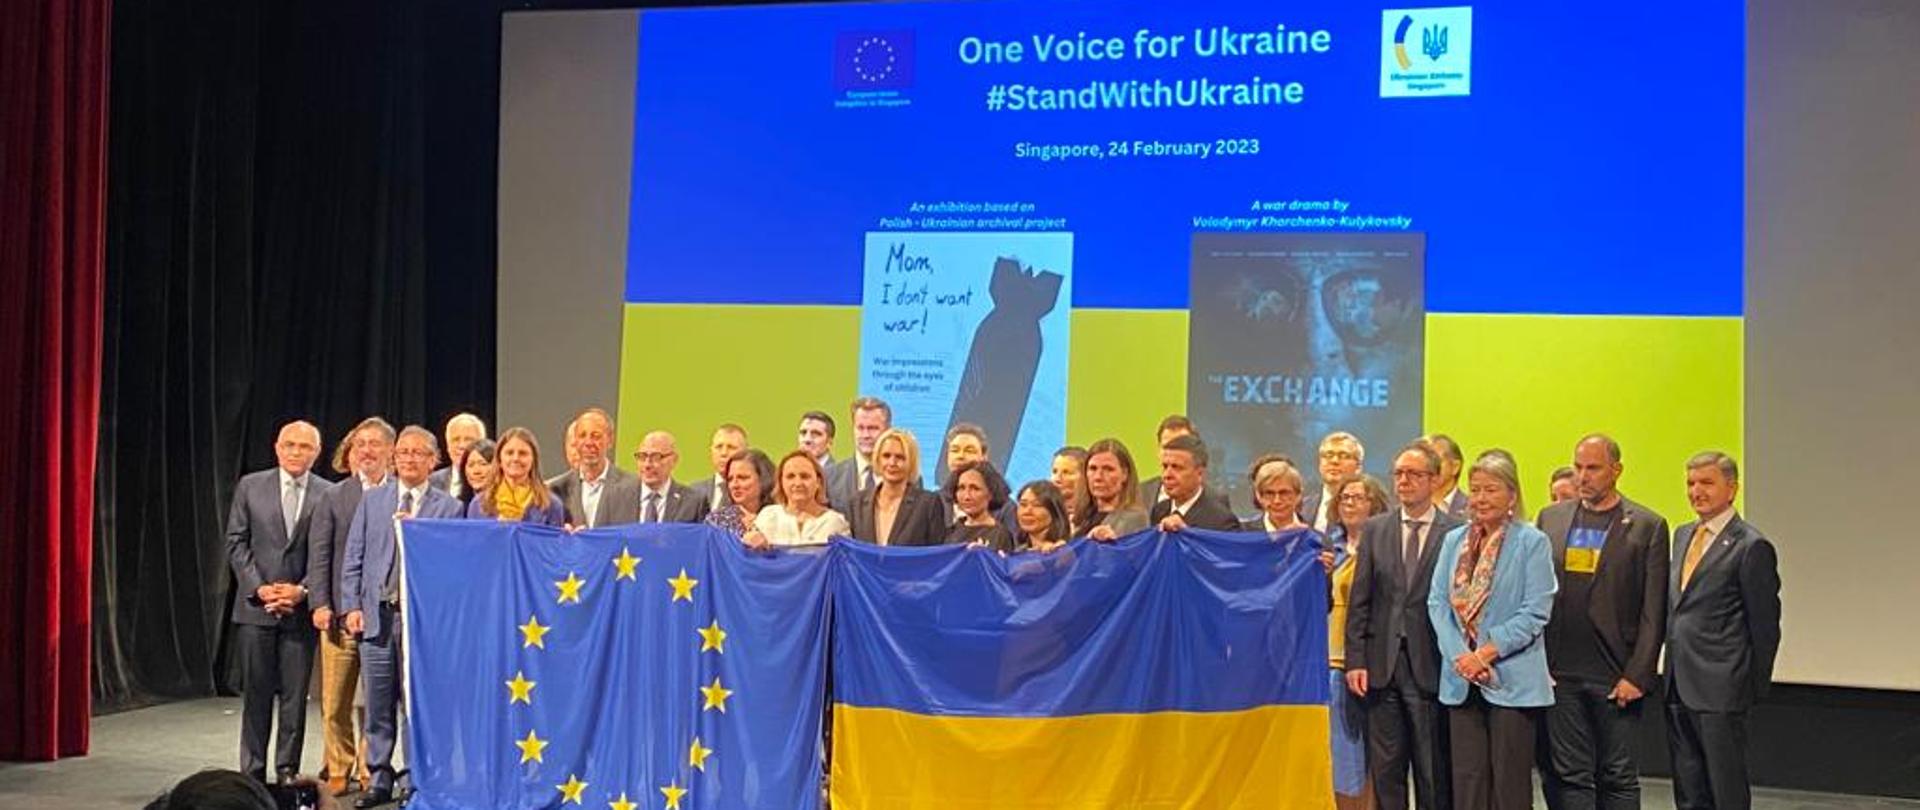 "One Voice For Ukraine"